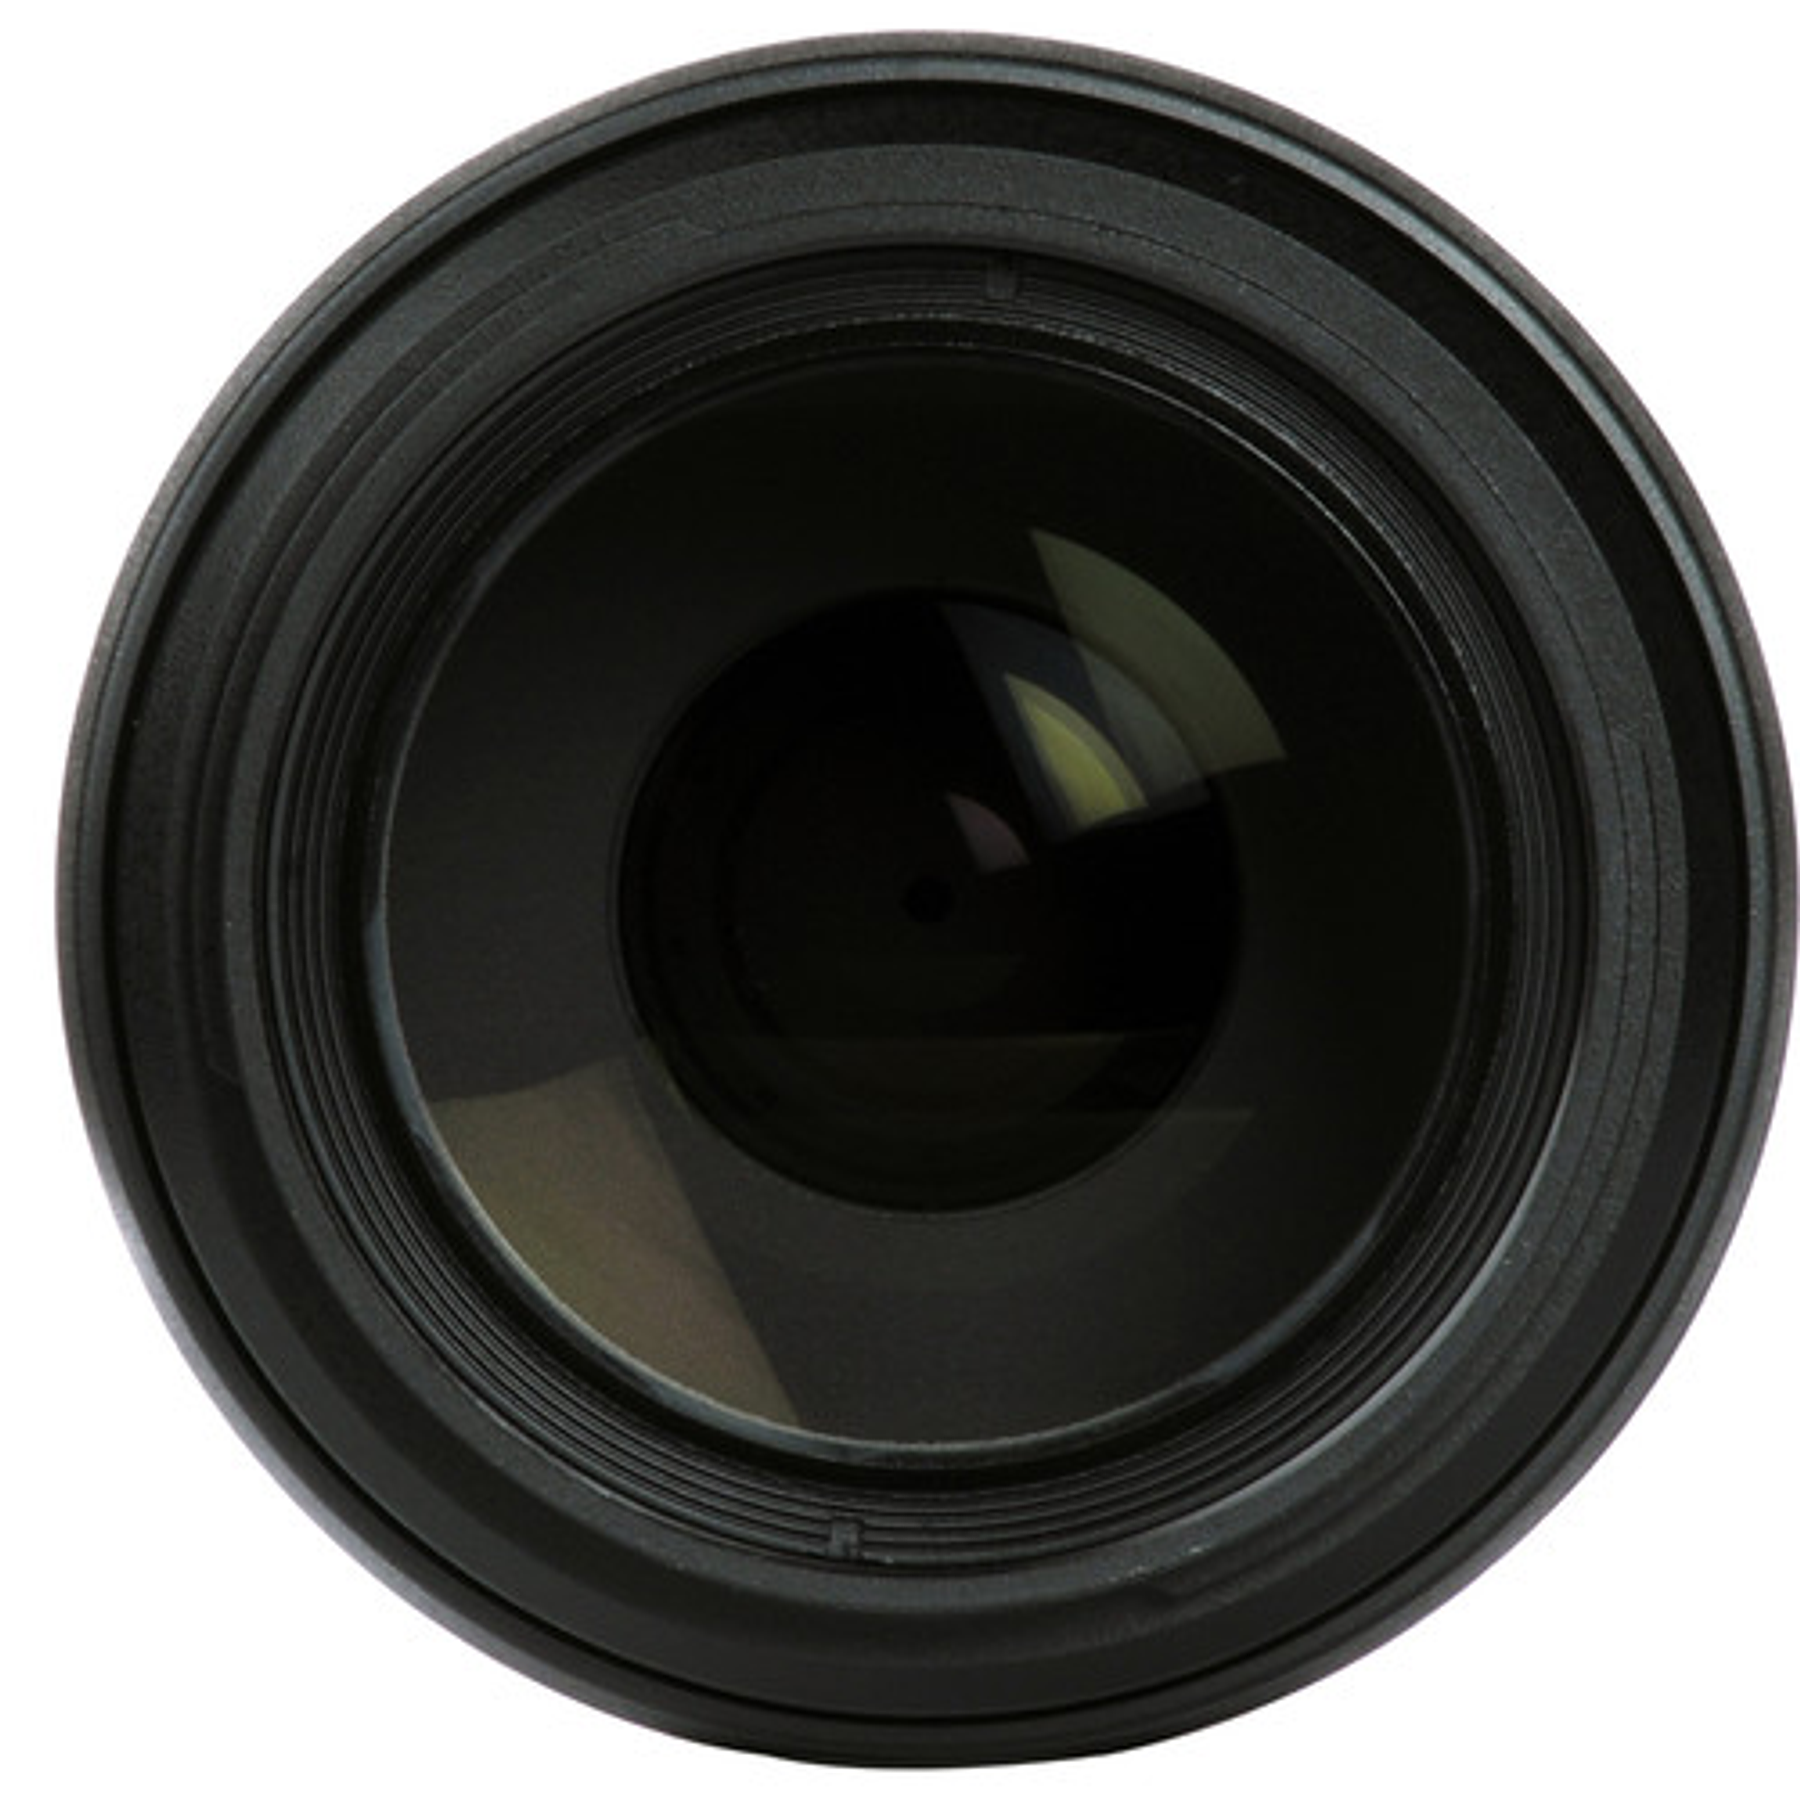 Tamron Lente SP AF70-300mm F/4-5.6 Di VC USD  Canon/Nikon